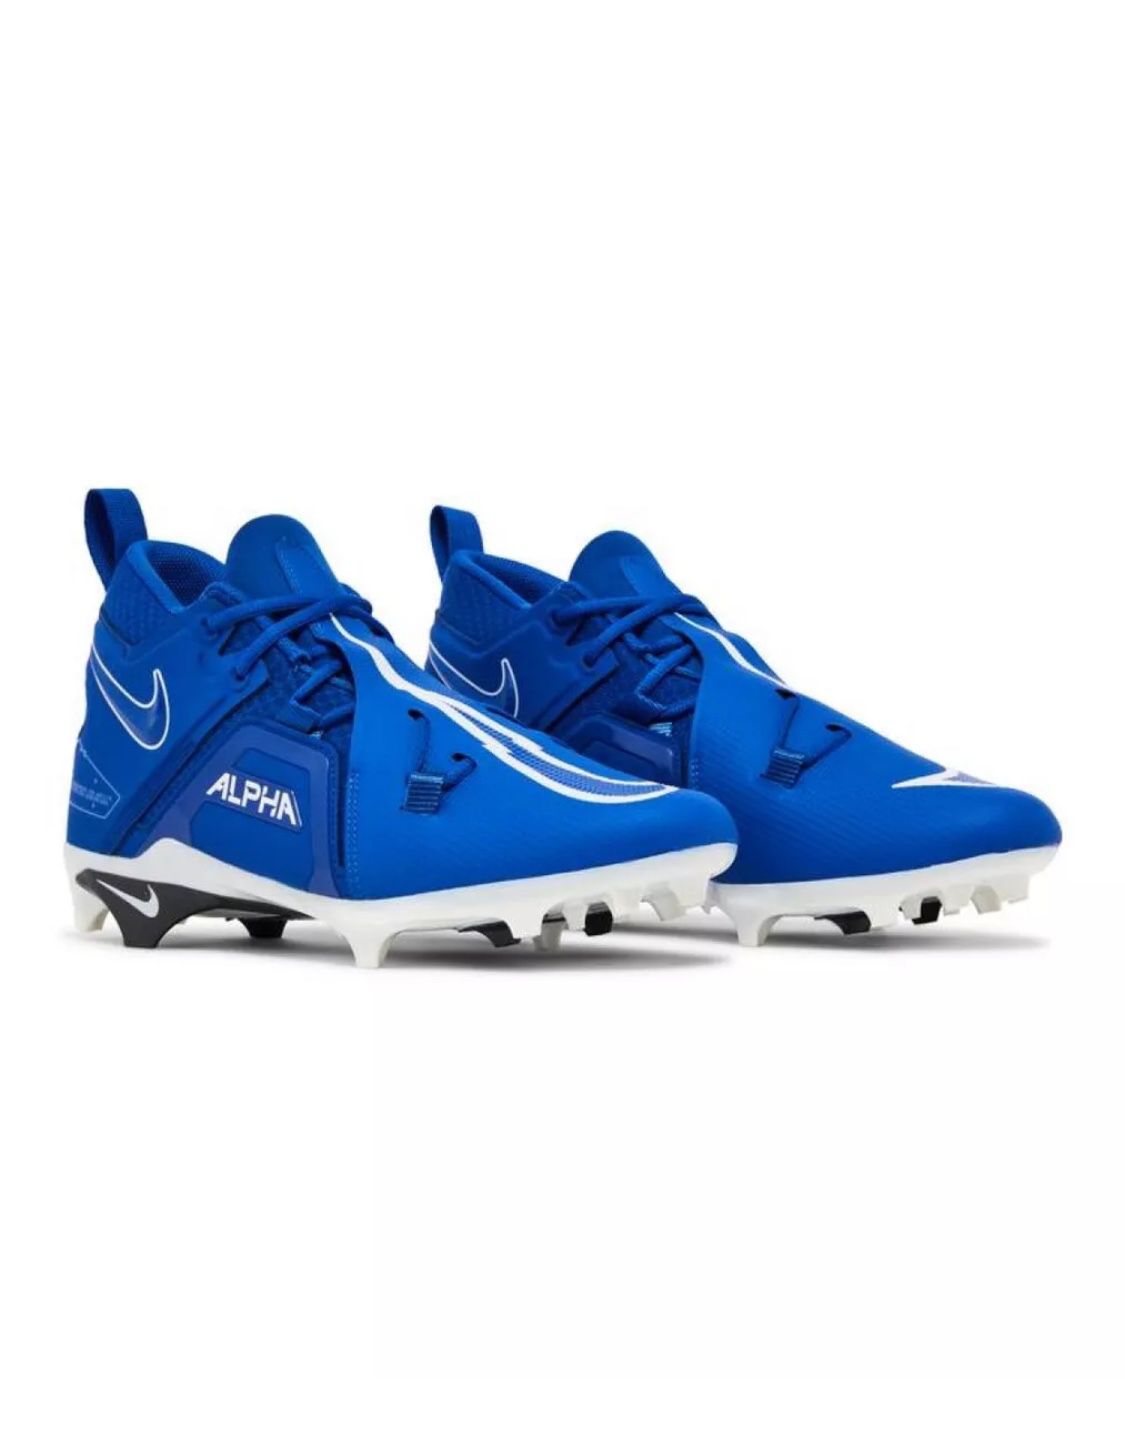 Nike Alpha Menace Pro Football Cleats Royal Blue Men’s Size 10.5